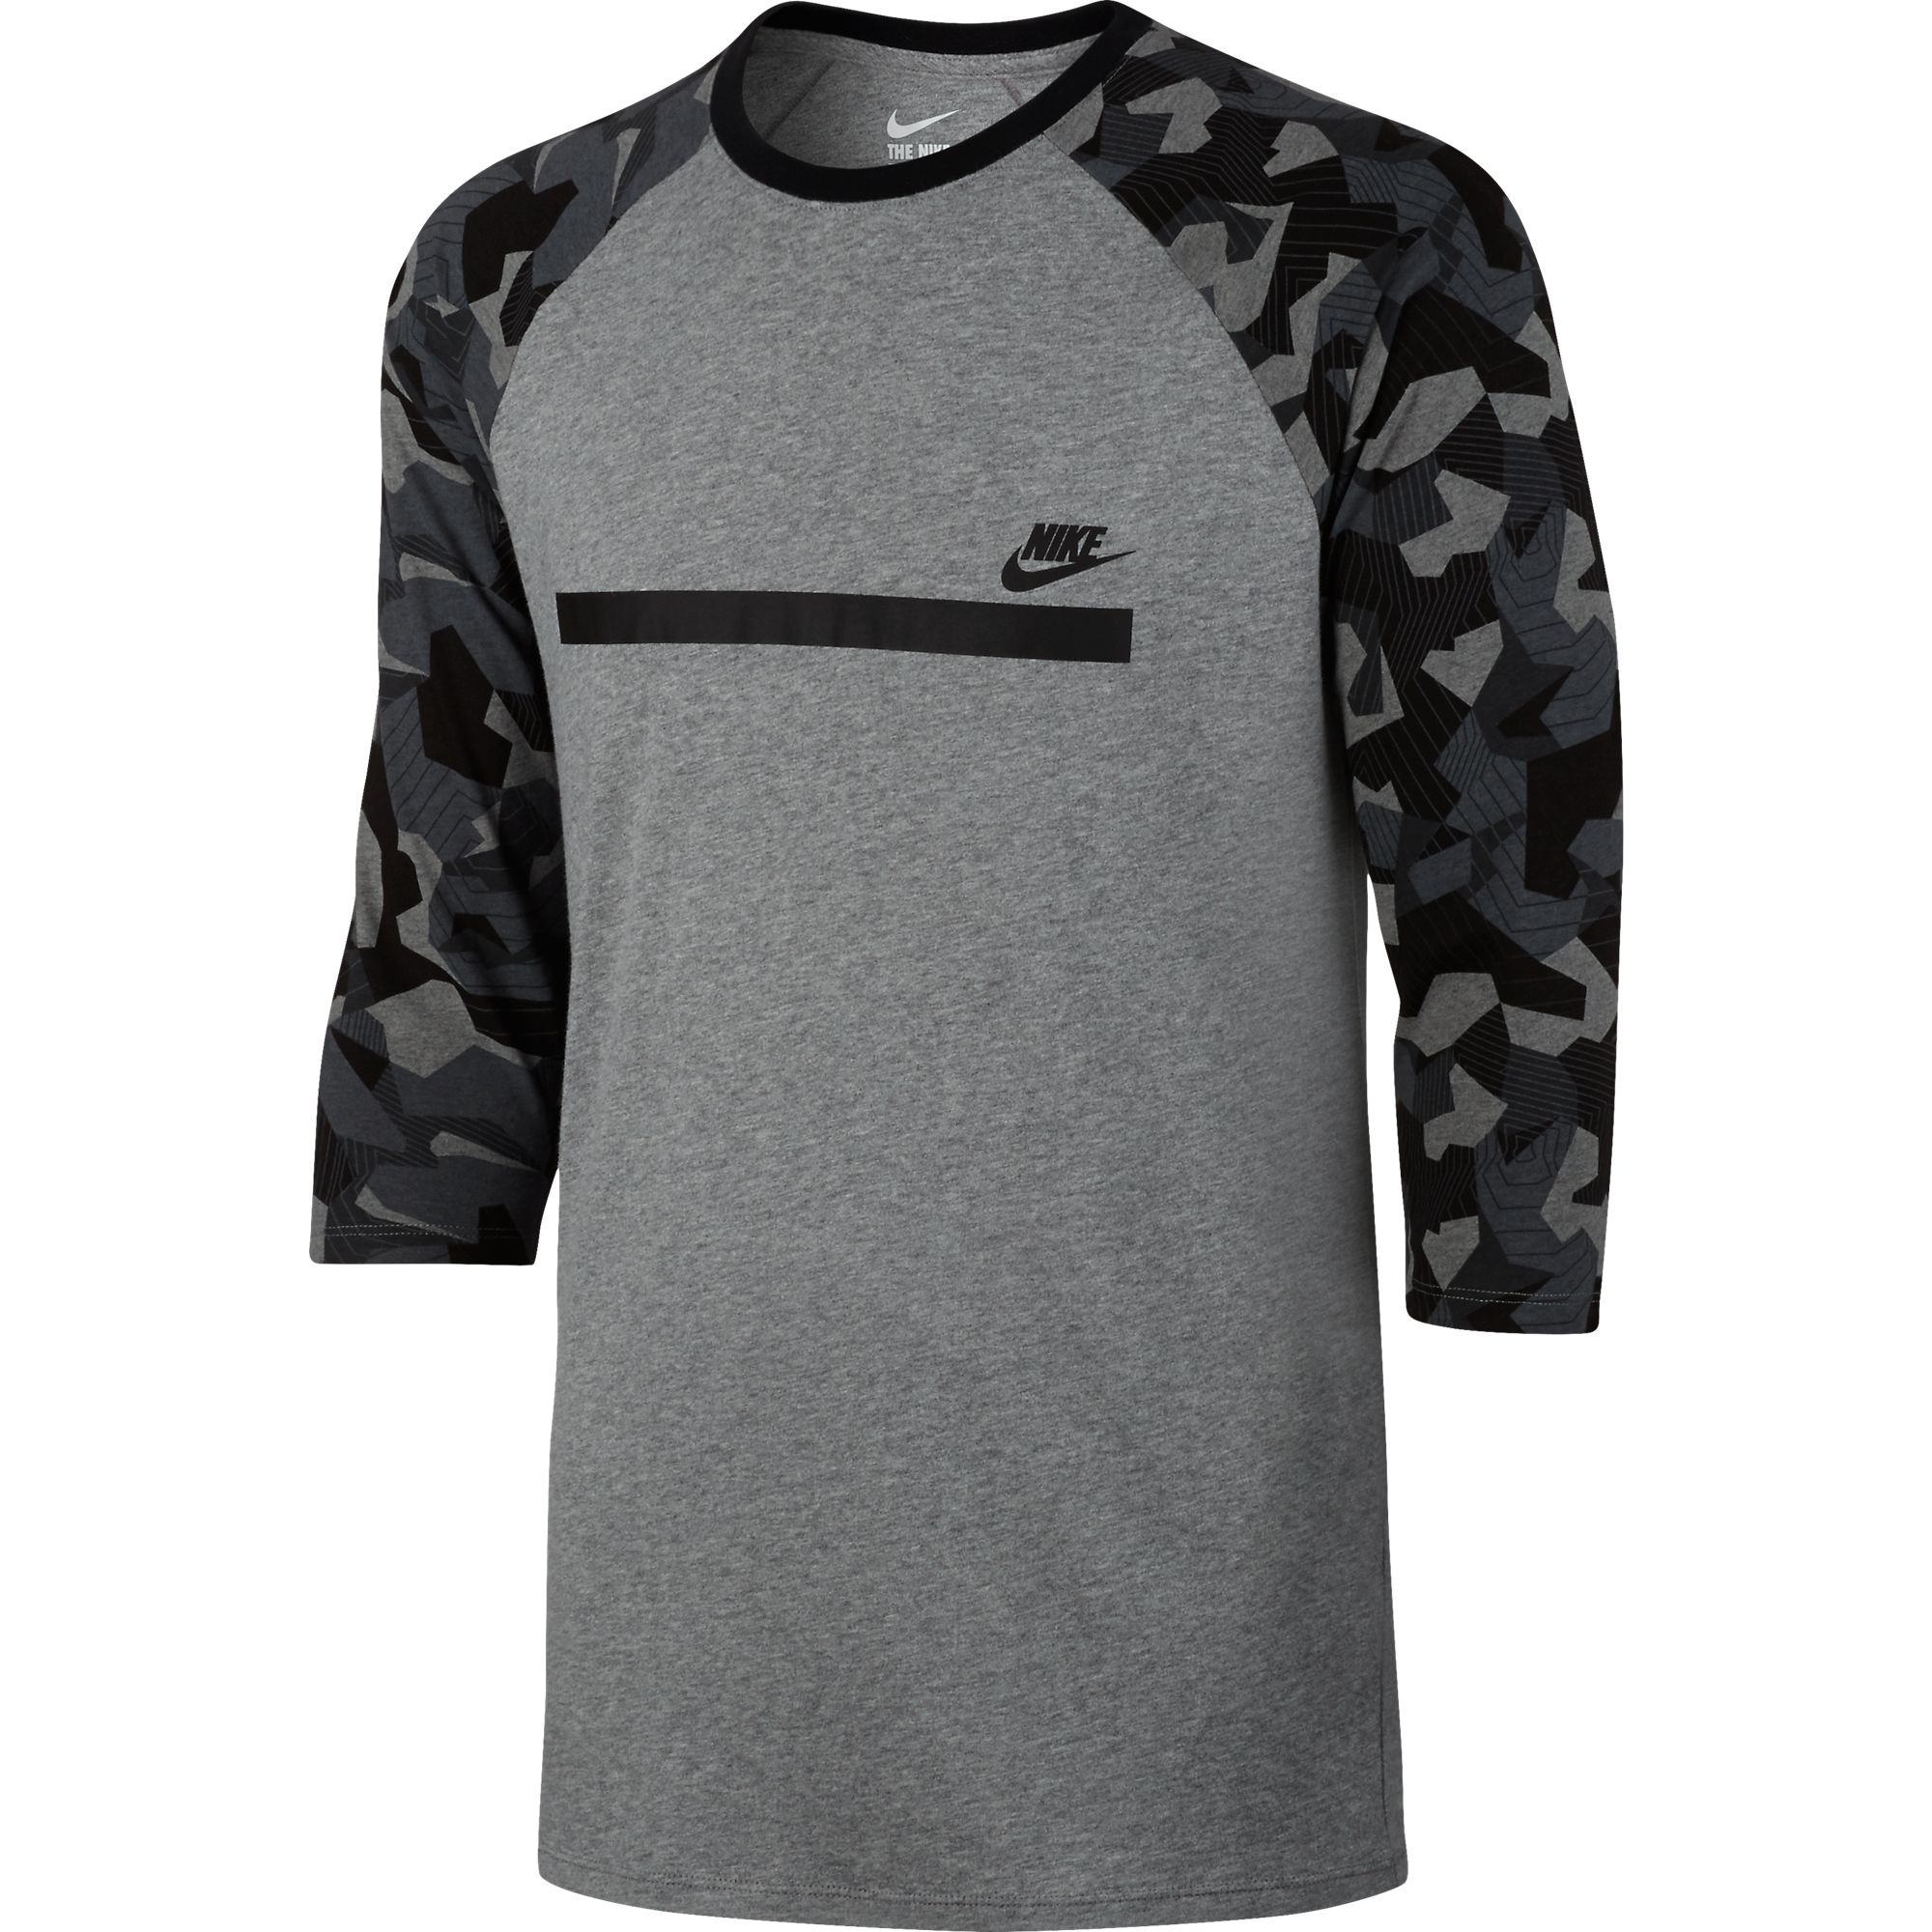 Nike Raglan Camo 3/4 Sleeves Men's T-Shirt Grey 805275-091 | eBay